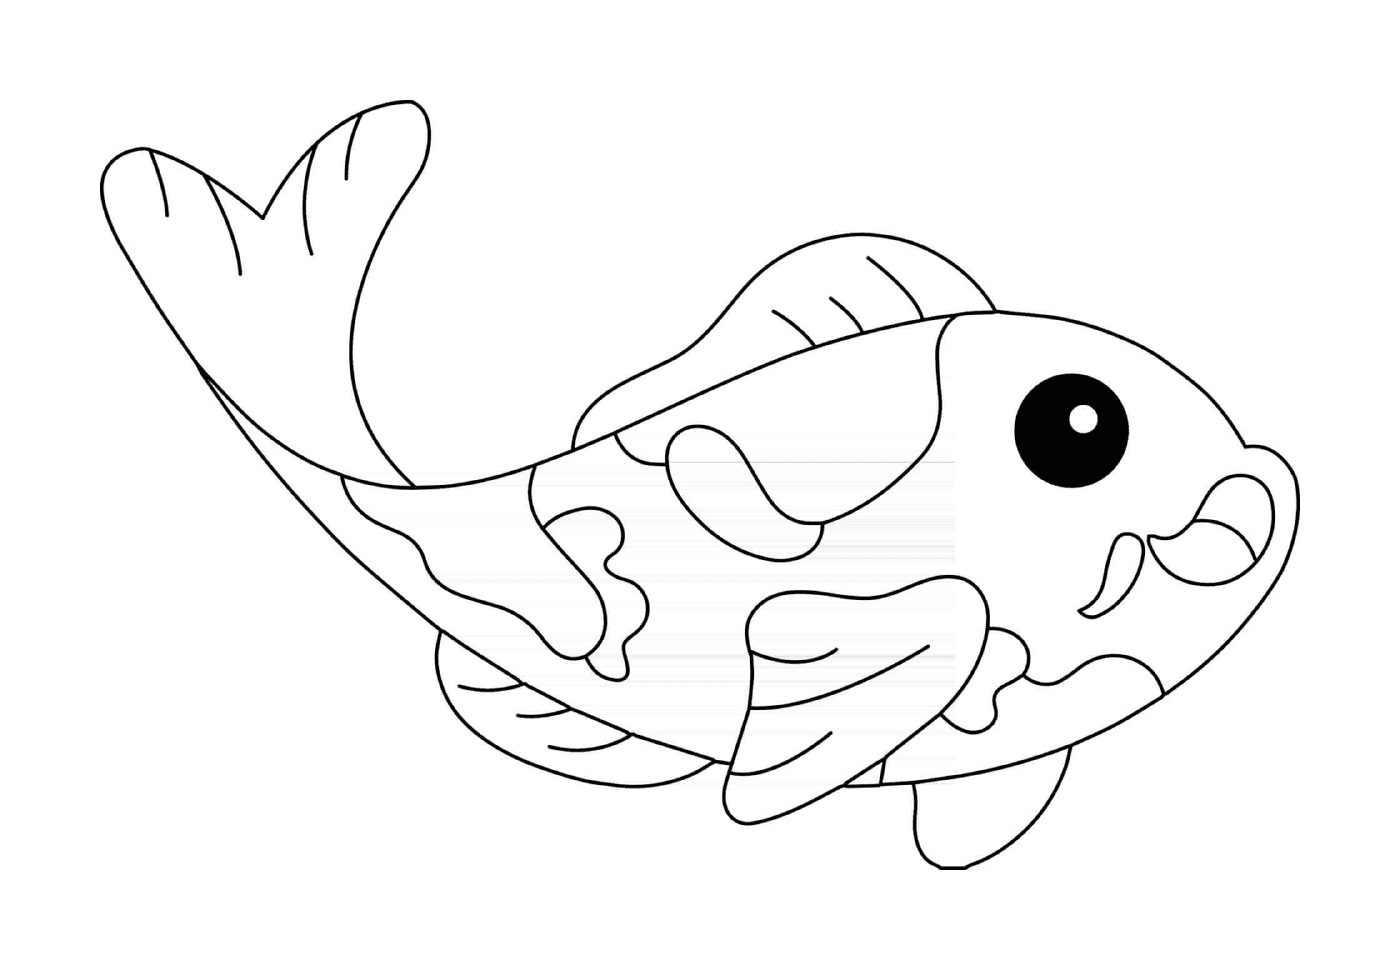  Fish carp koi 